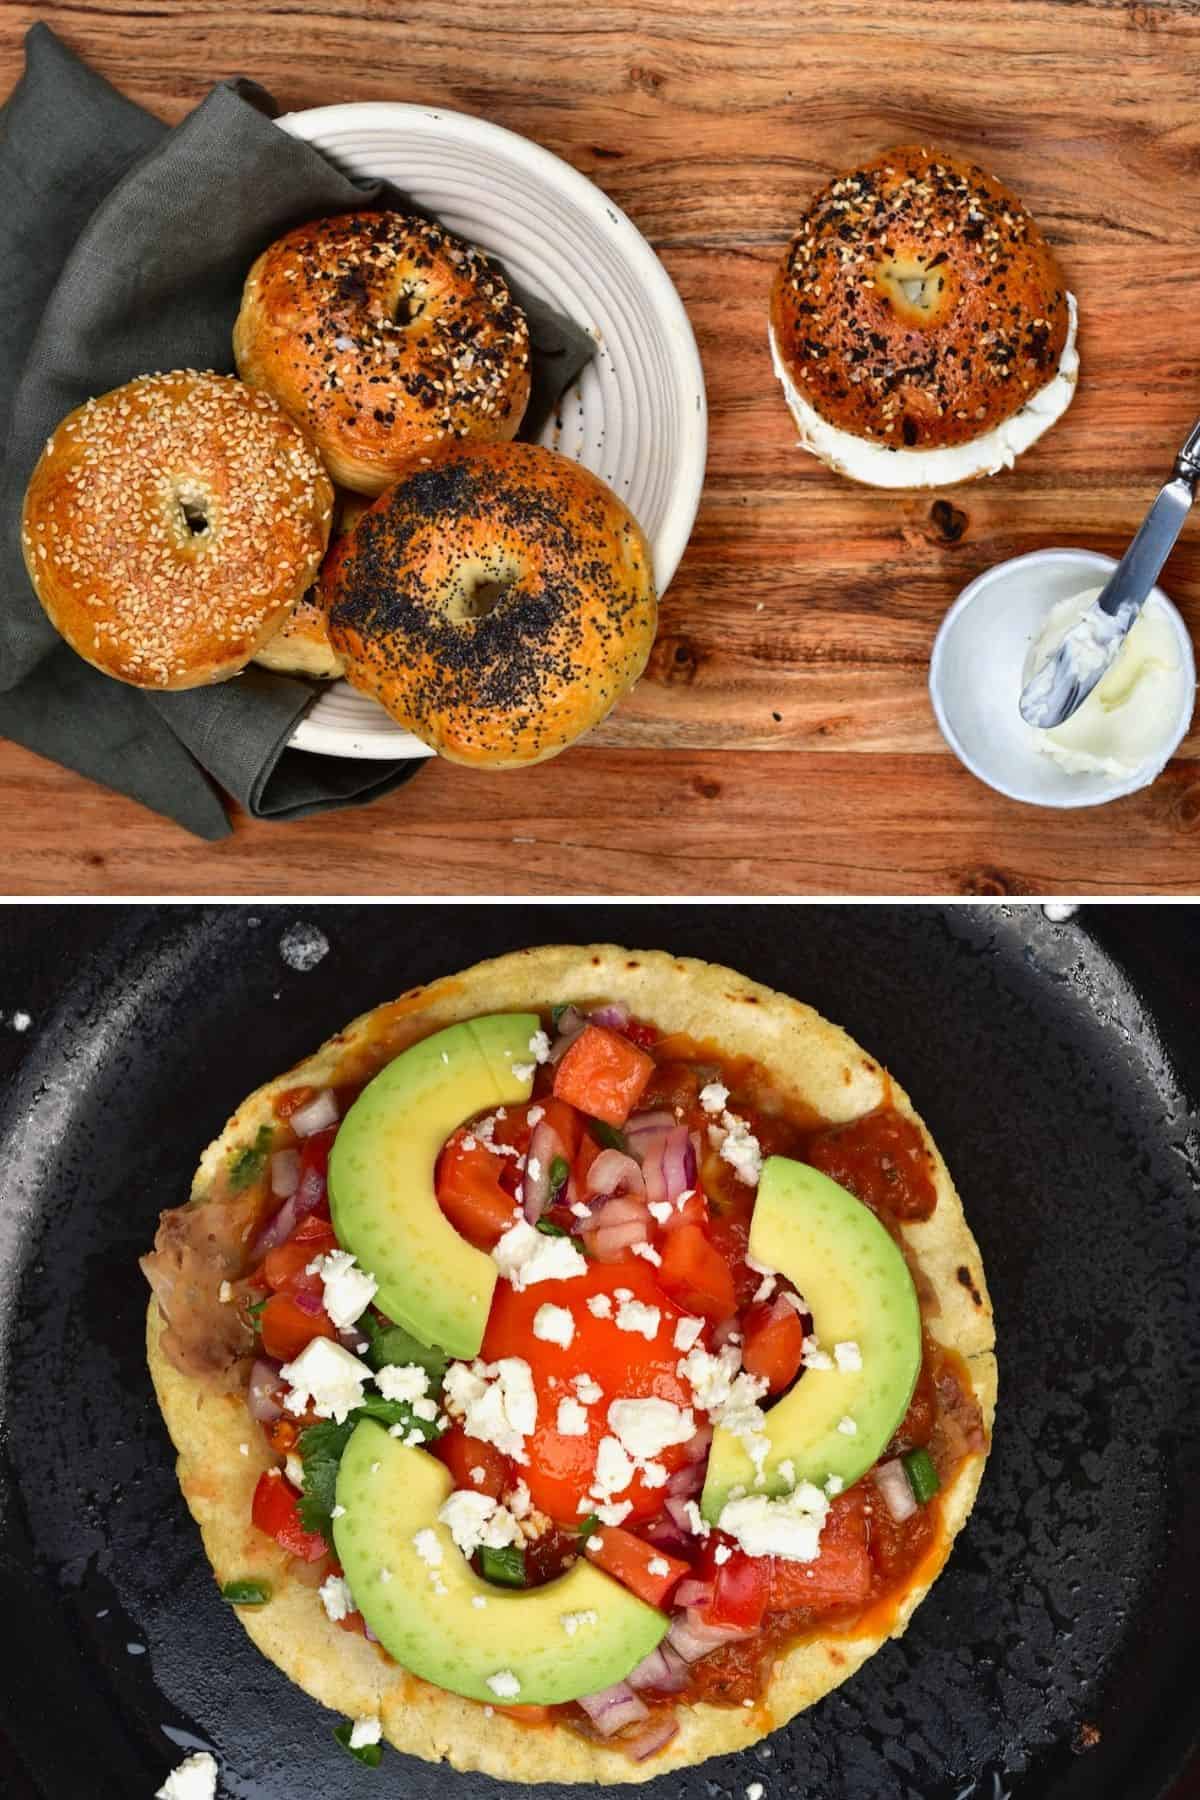 Two North American breakfast ideas - bagels with cream, huevos rancheros.